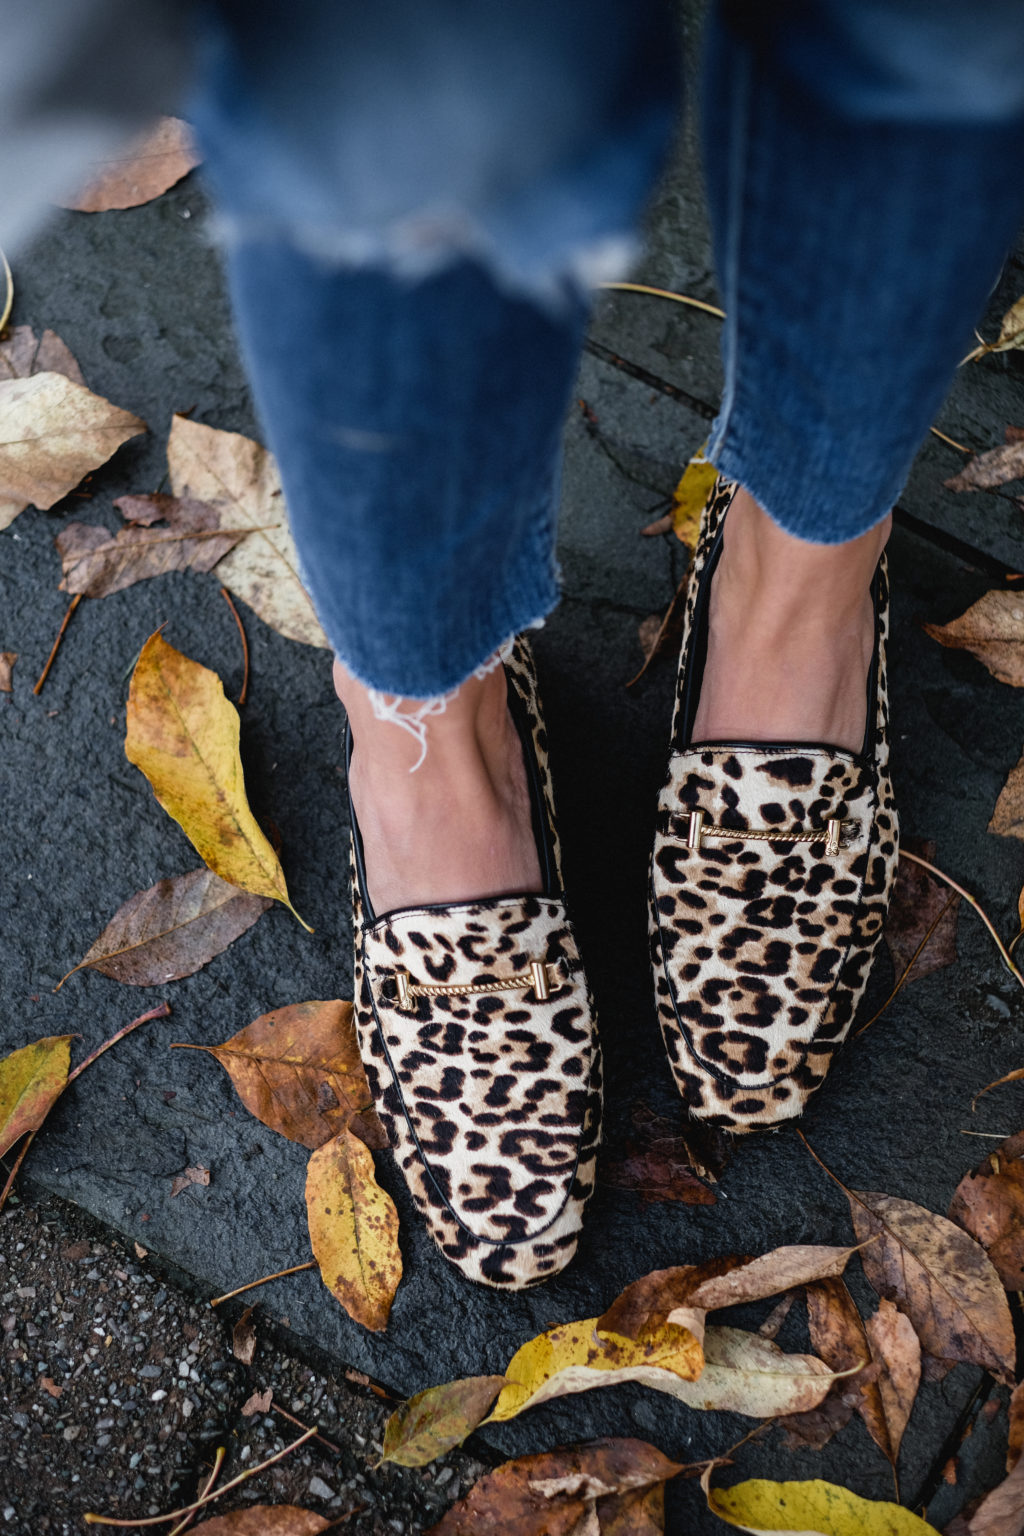 Leopard Boyfriend Jeans | The Diva: a Dallas Fashion Blog featuring Beauty & Lifestyle